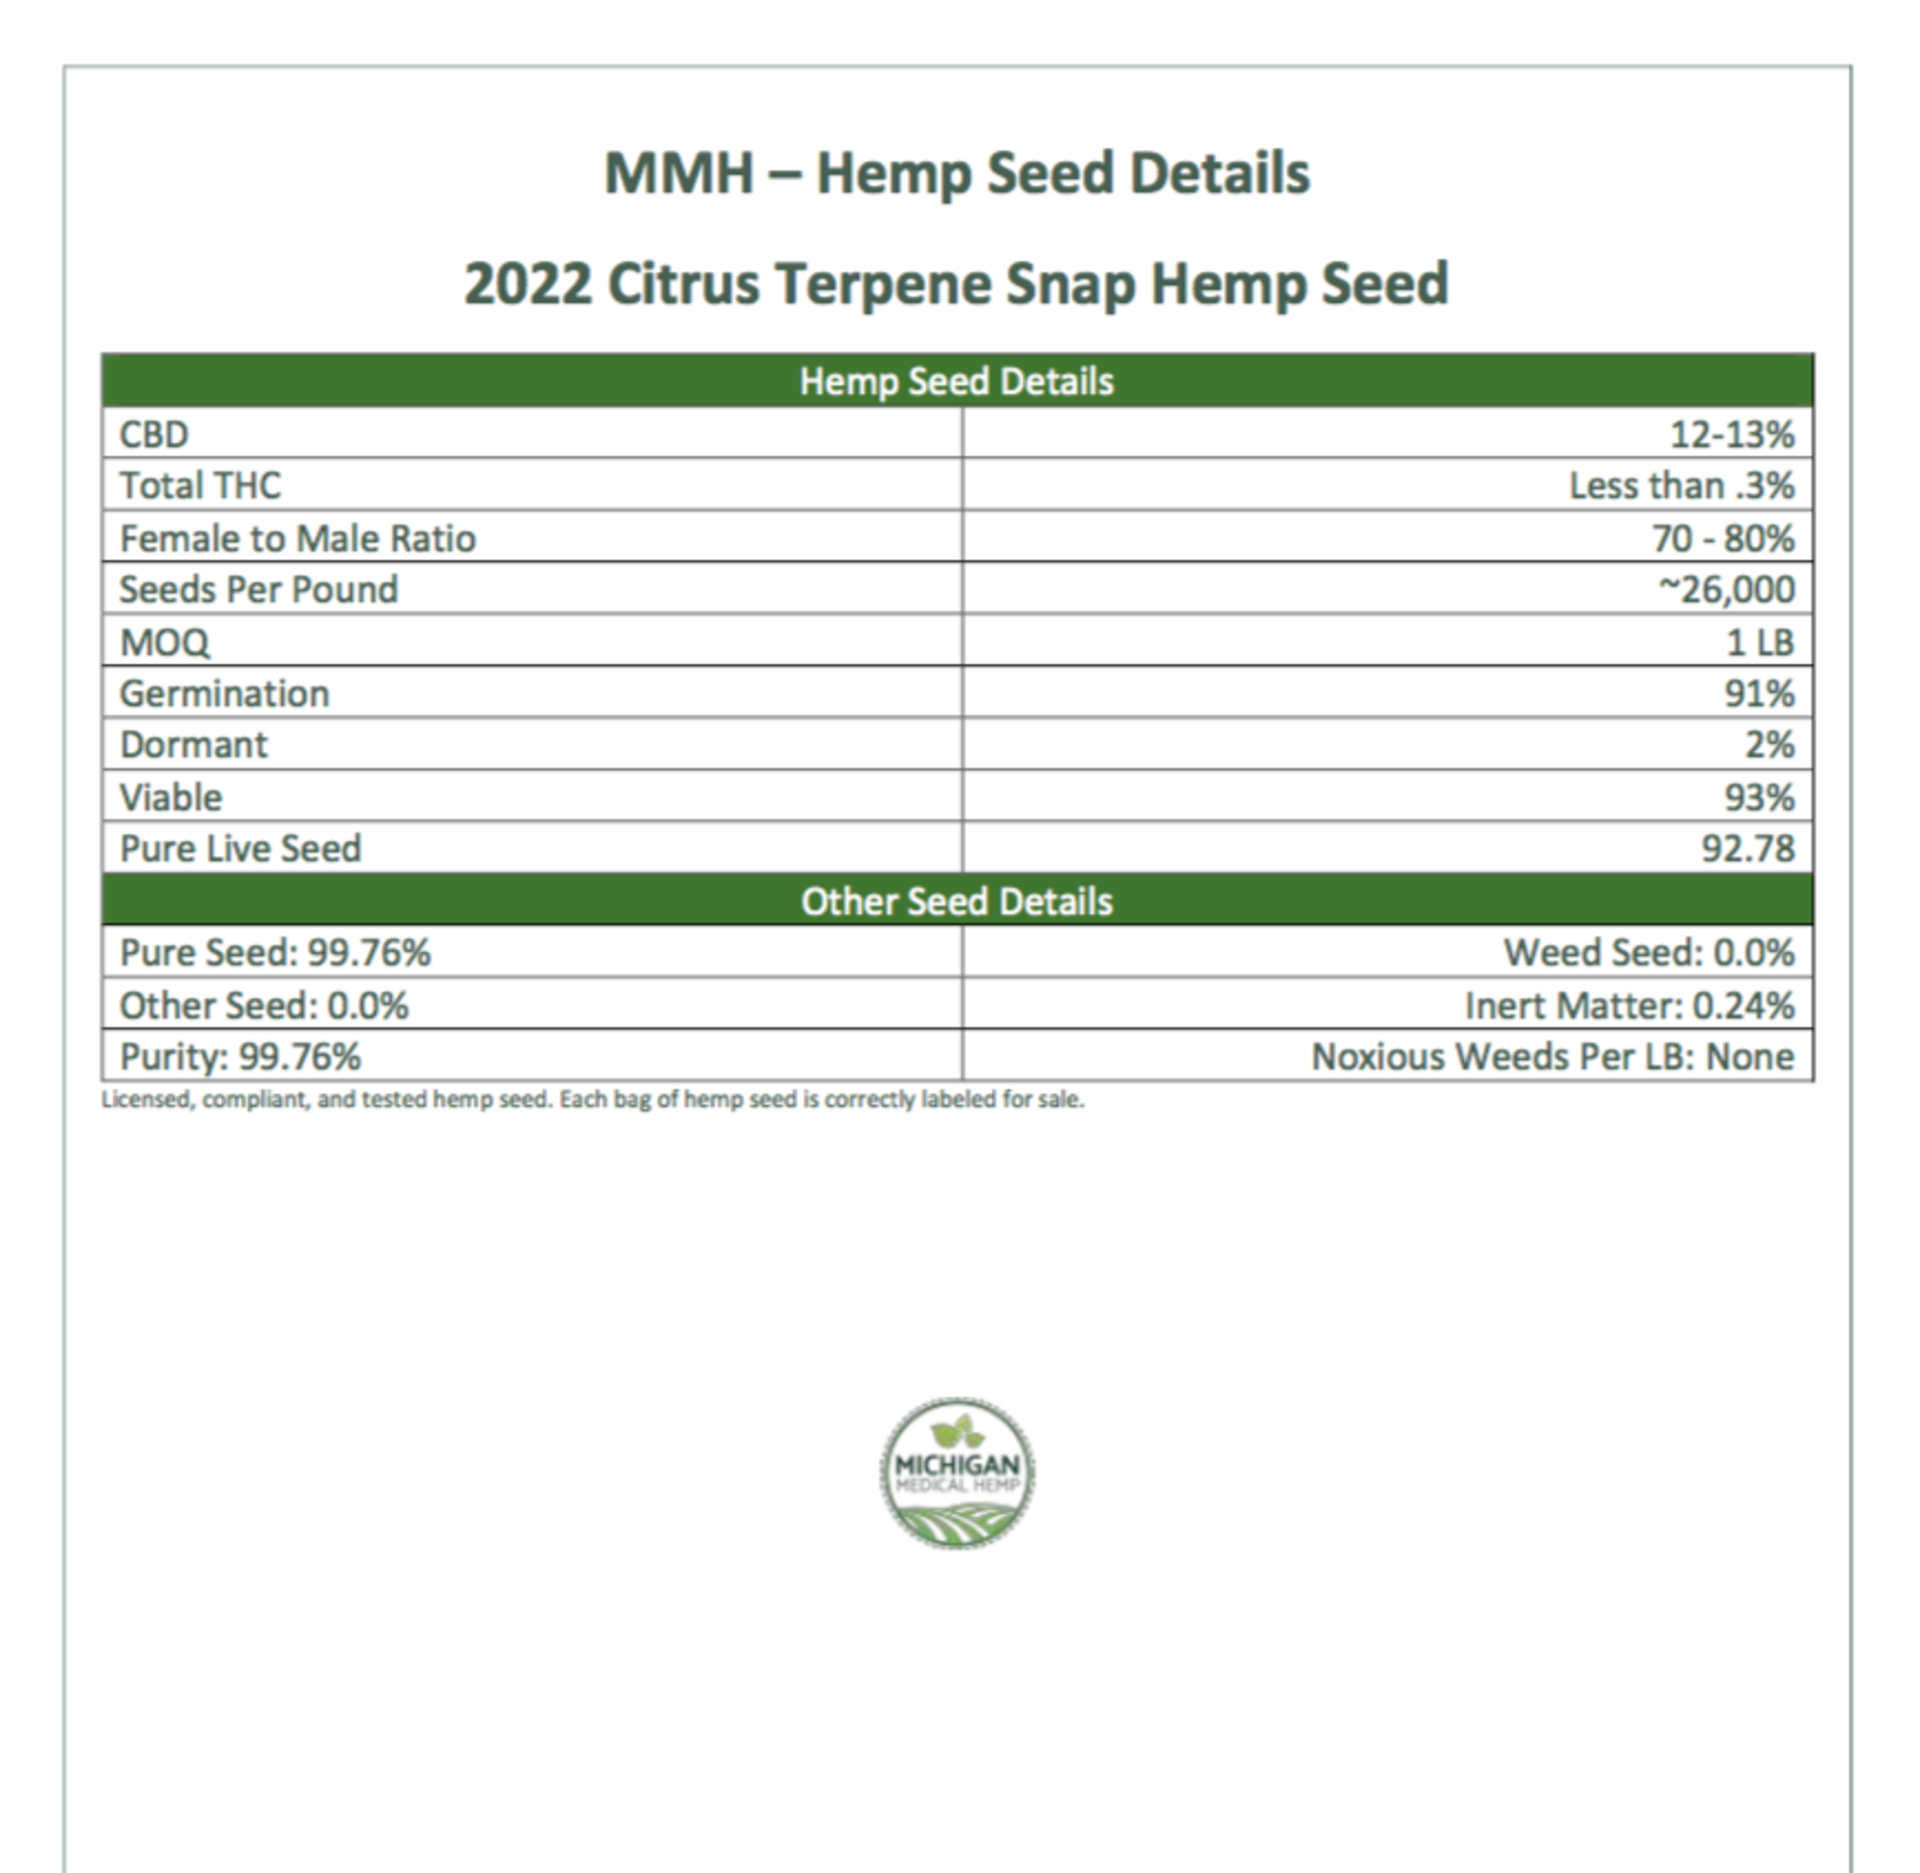 QTY 1 LBS (~26,000 Seeds) MMH Citrus Terpene Snap Hemp Seeds - Image 3 of 10